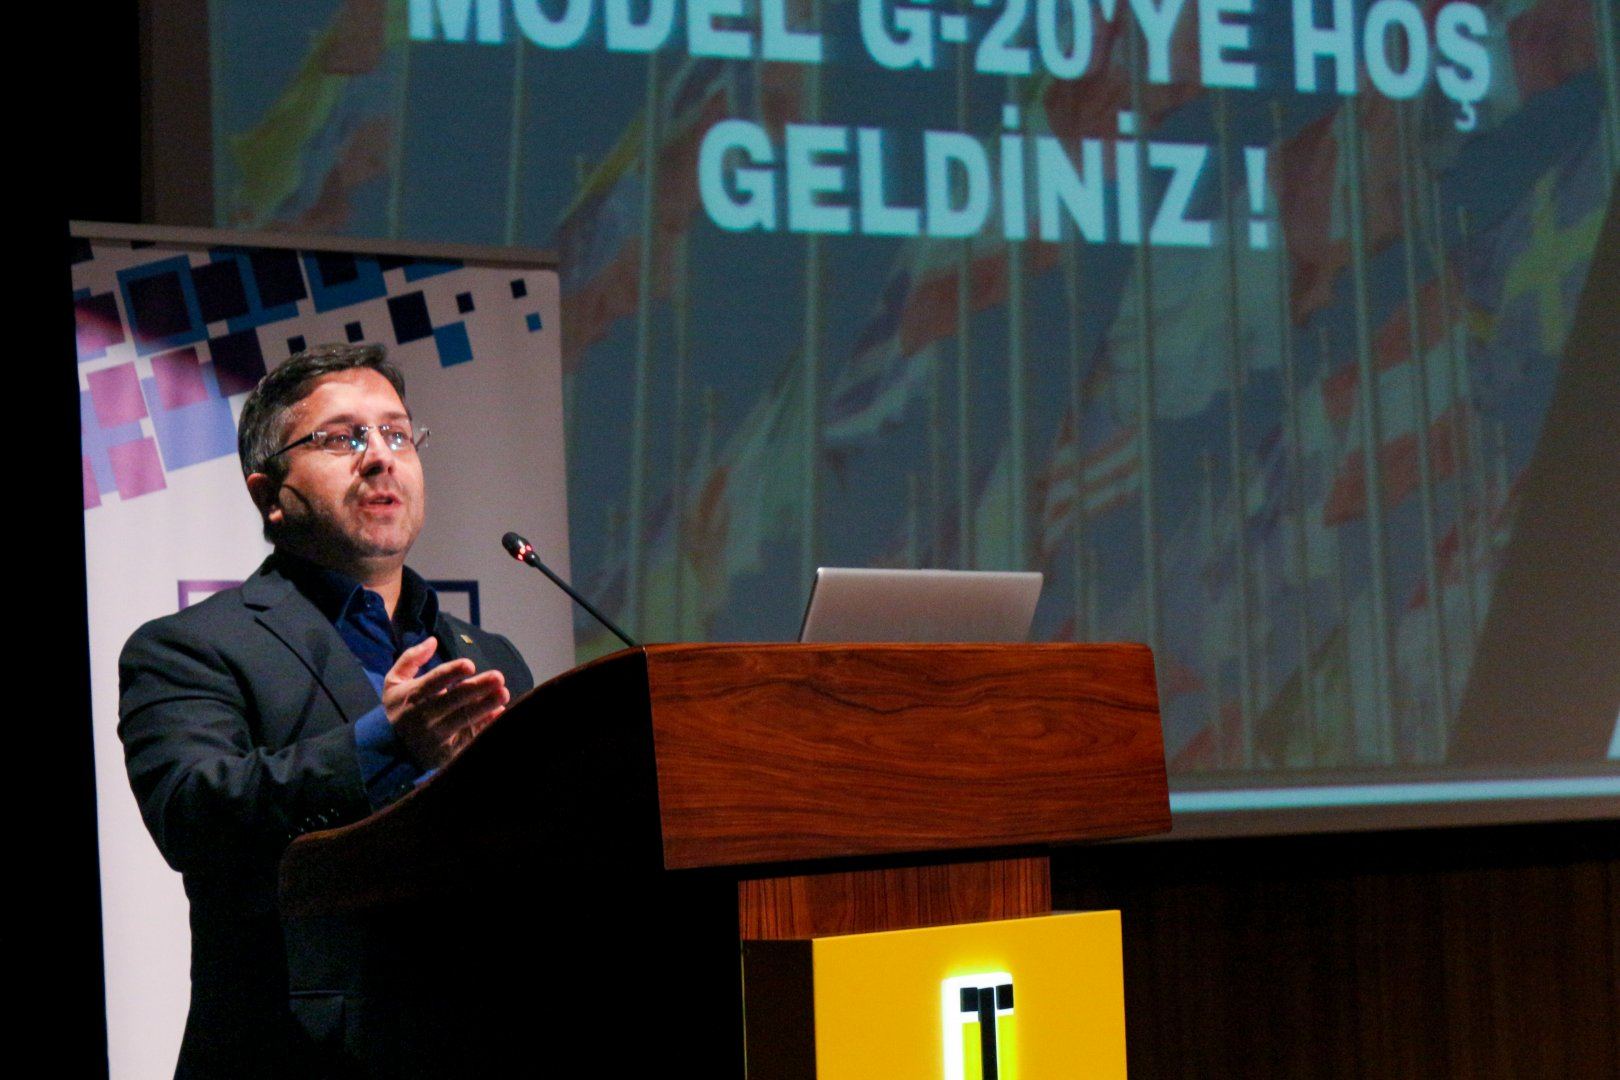 Istanbul Commerce University holds Model G20 (PHOTO)